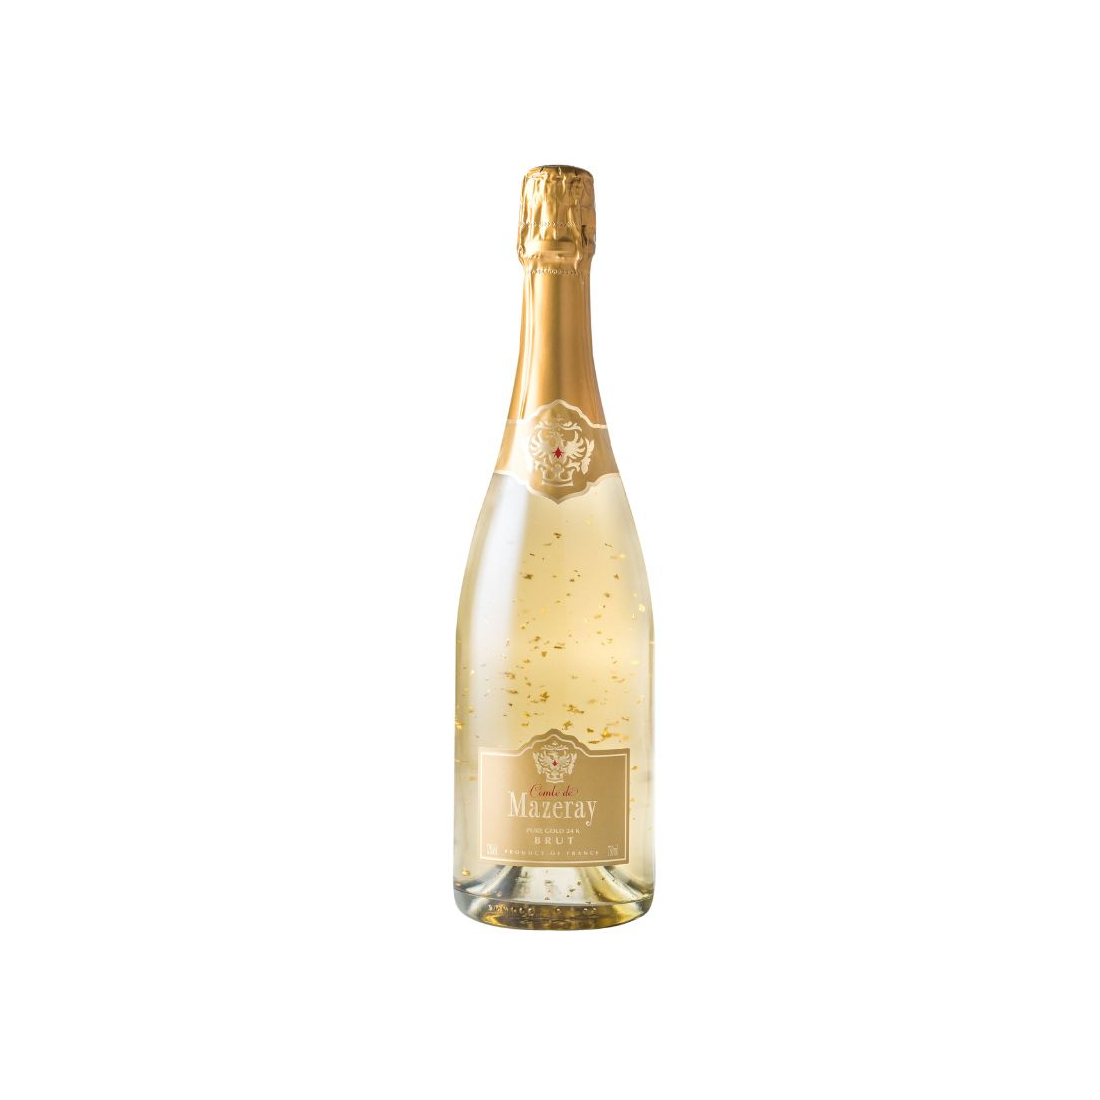 Bottle 24K 75cl Comte de Mazeray Brut made from Champagne